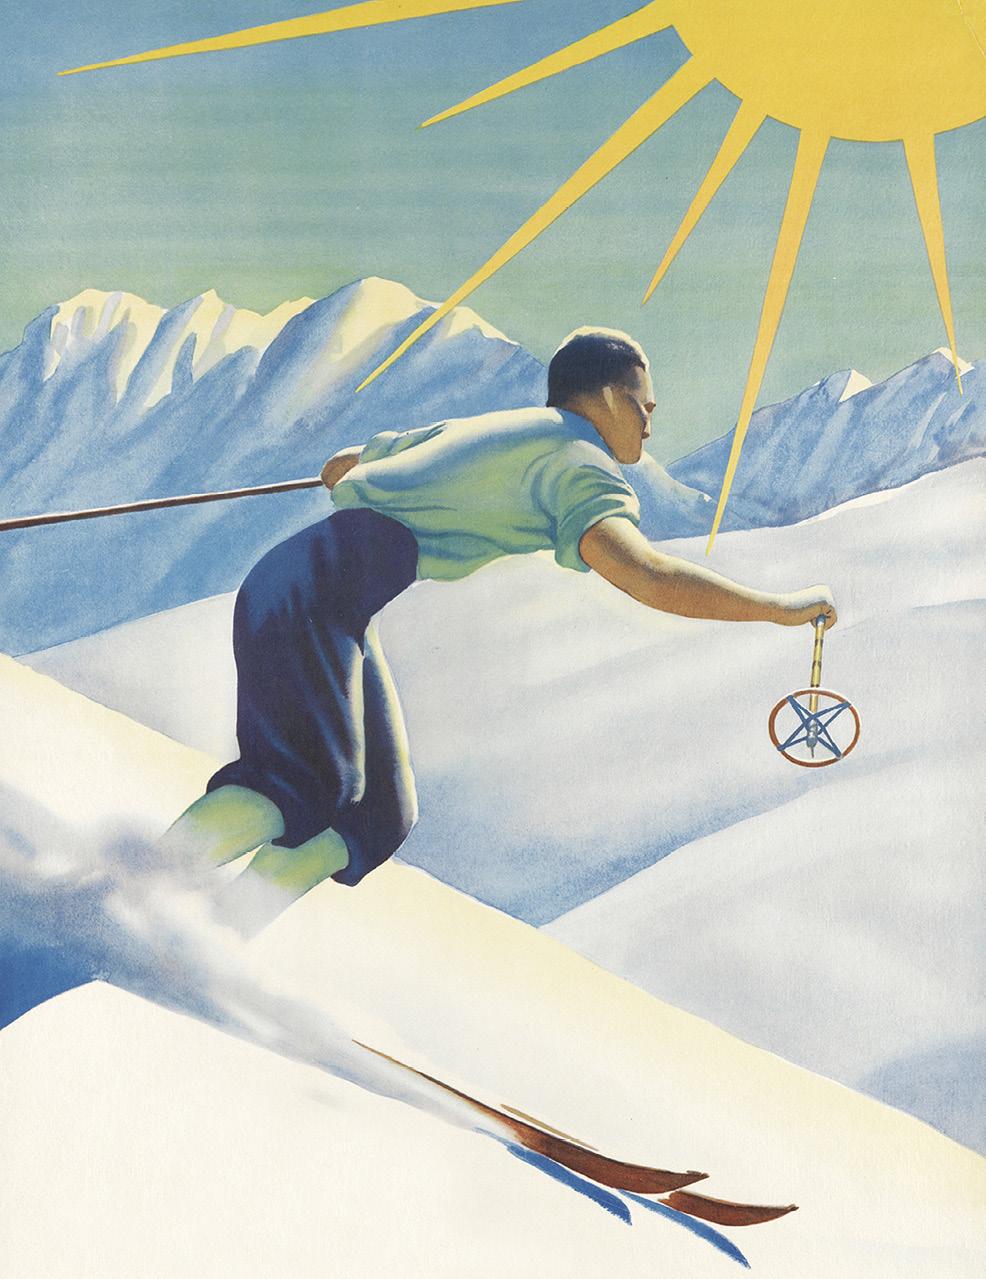 Ragnar Ulland and the Kongsberg Boys | Skiing History